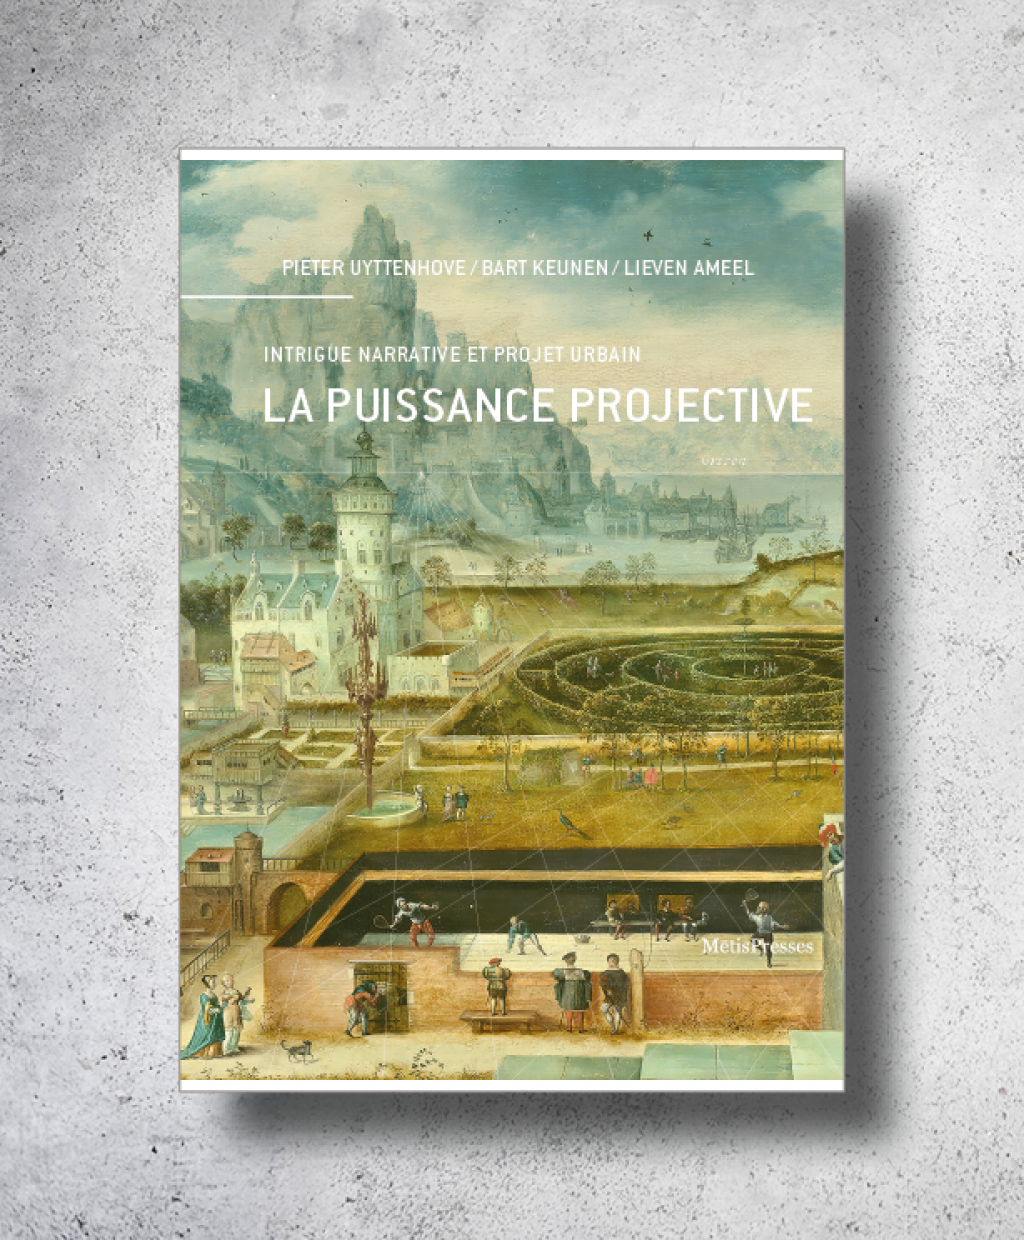 L. Ameel, B. Keunen, P. Uyttenhove (dir.), La puissance projective. Intrigue narrative et projet urbain